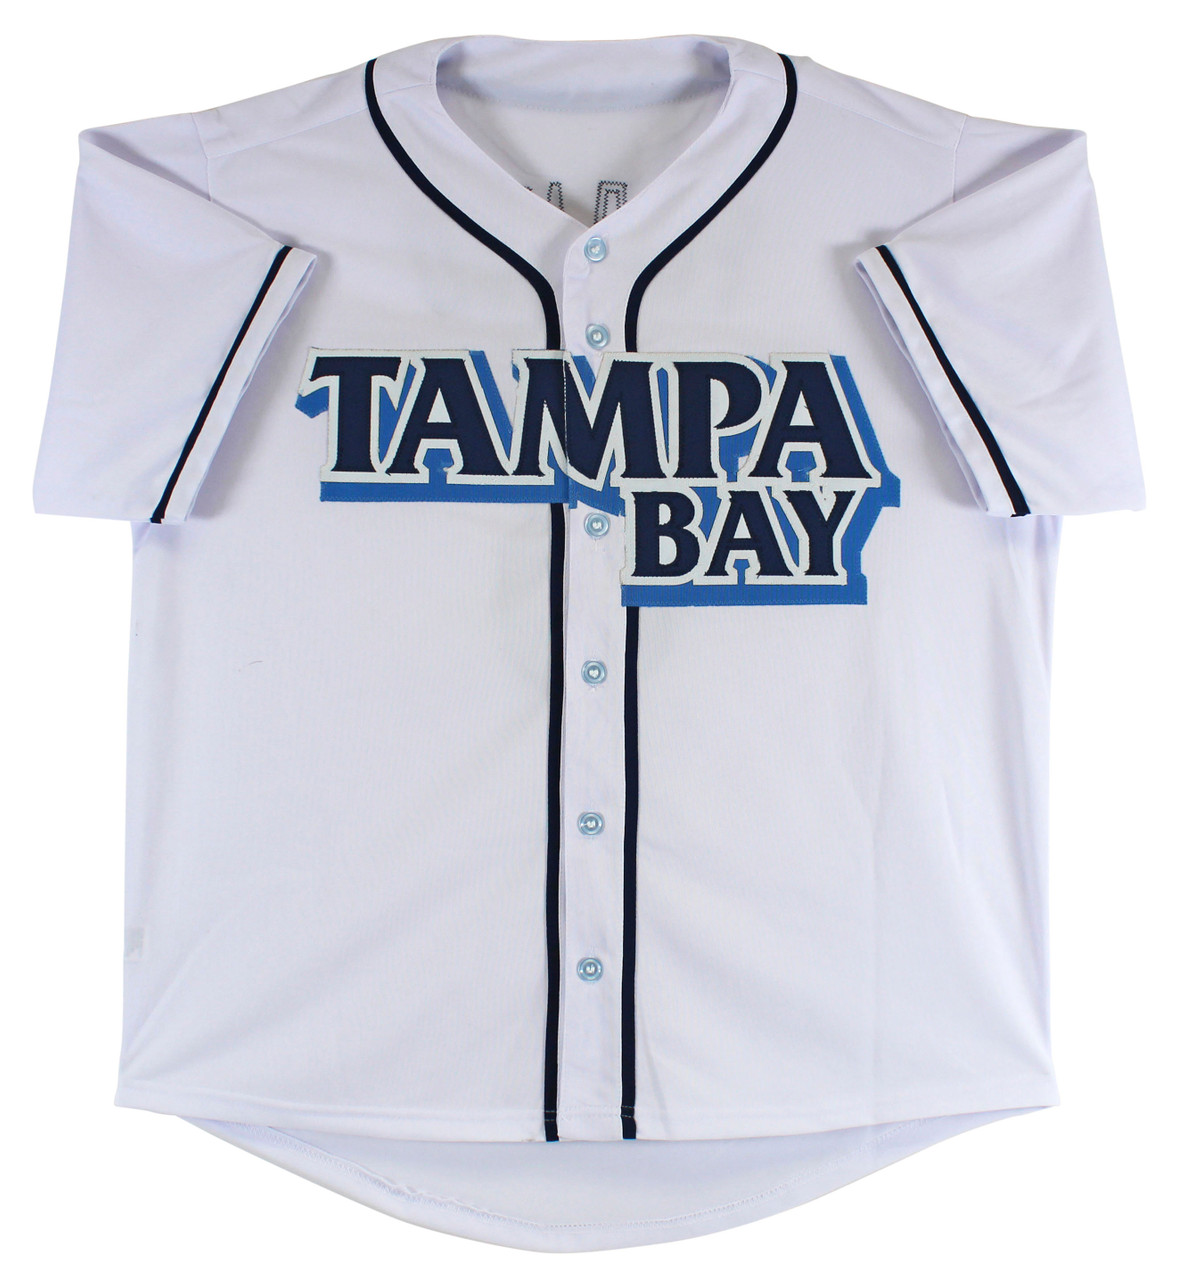 Official Tampa Bay Rays Jerseys, Rays Baseball Jerseys, Uniforms